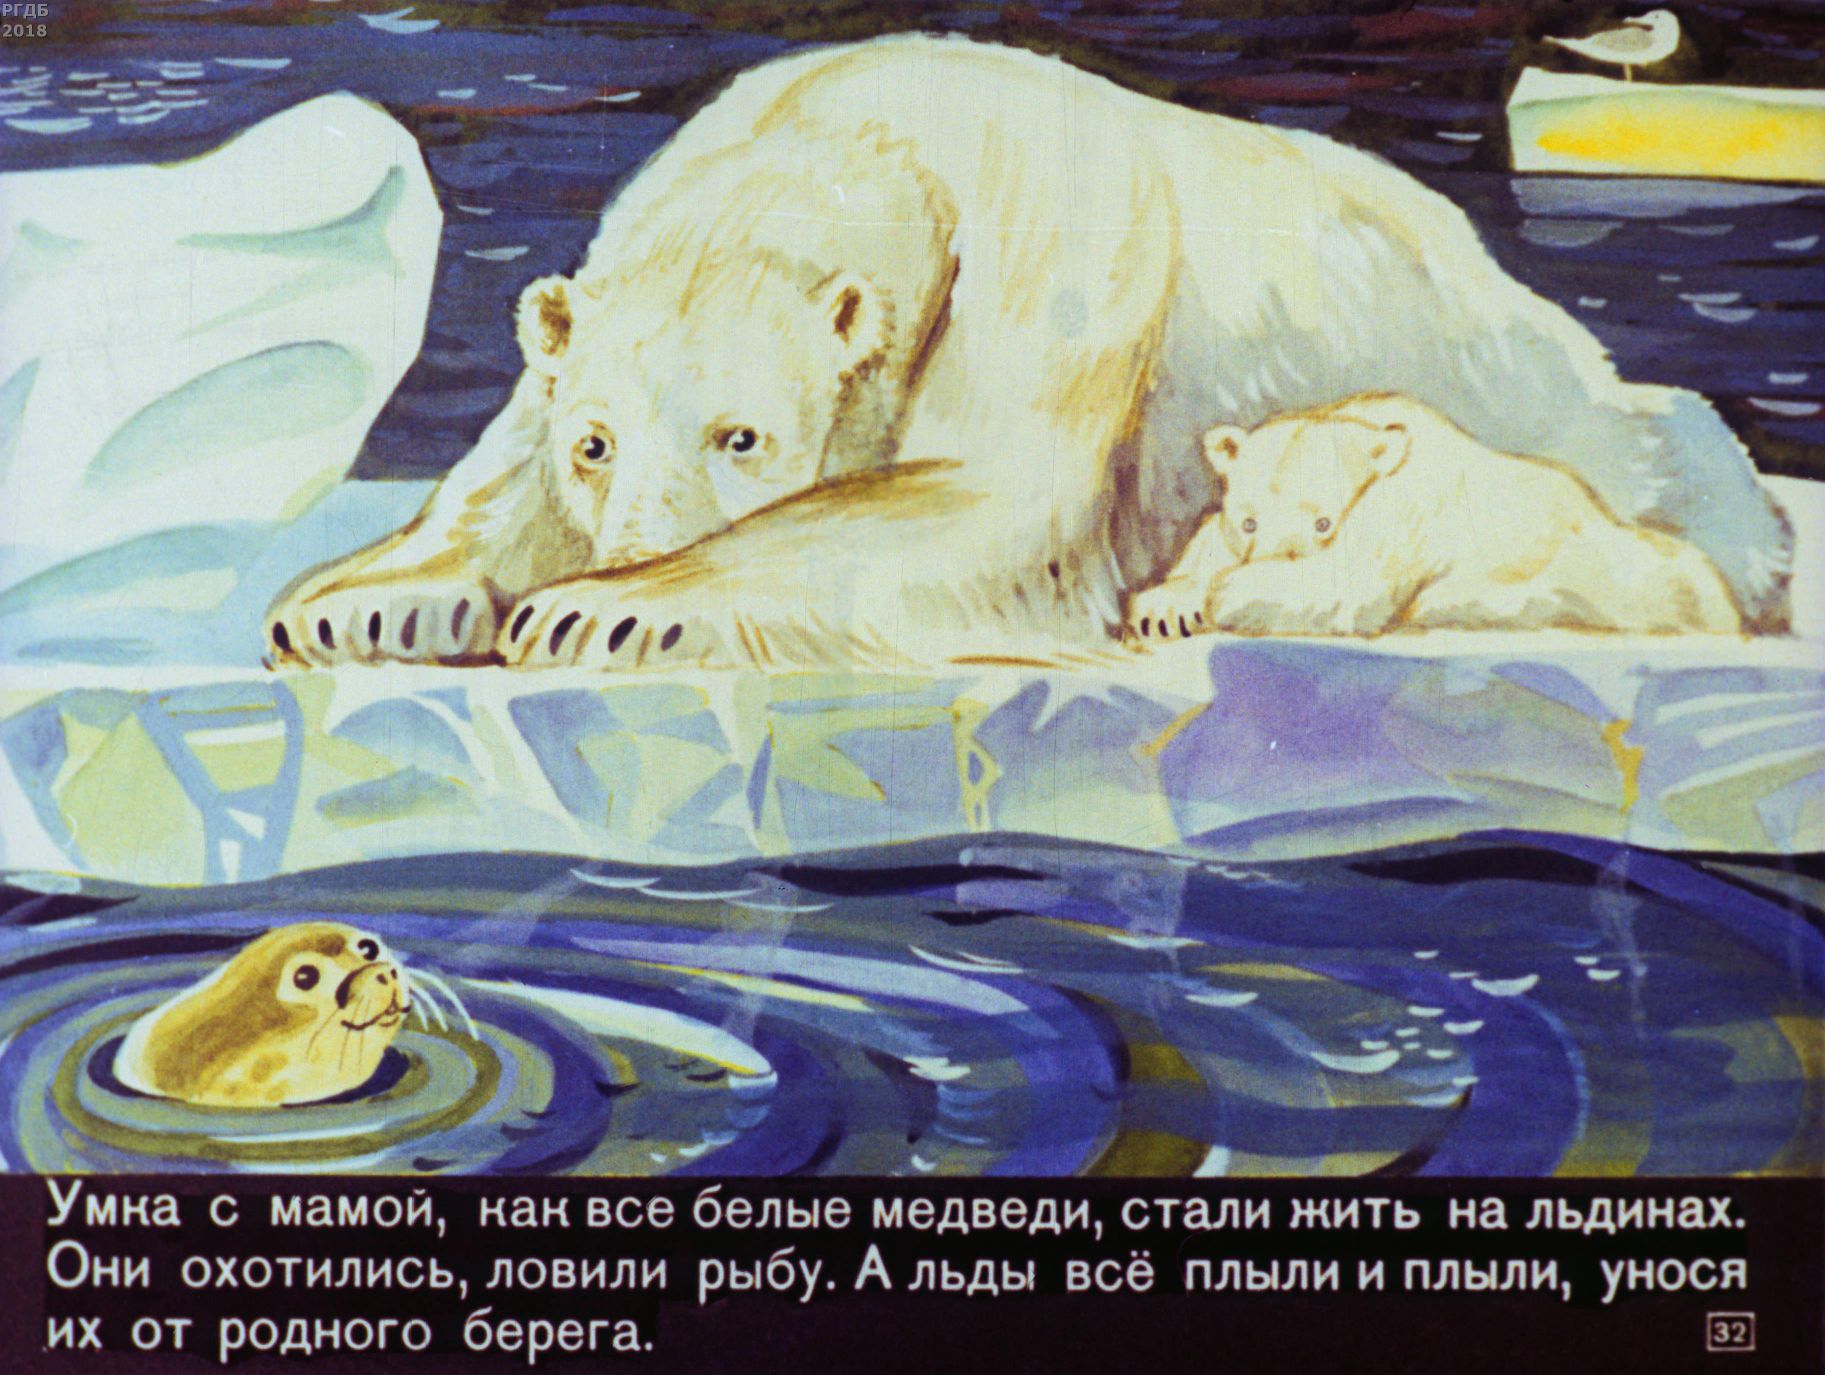 Колыбельная про медведей. Сказка про белого медведя. Умка сказка. Умка на льдине. Сказка про белого мишку.